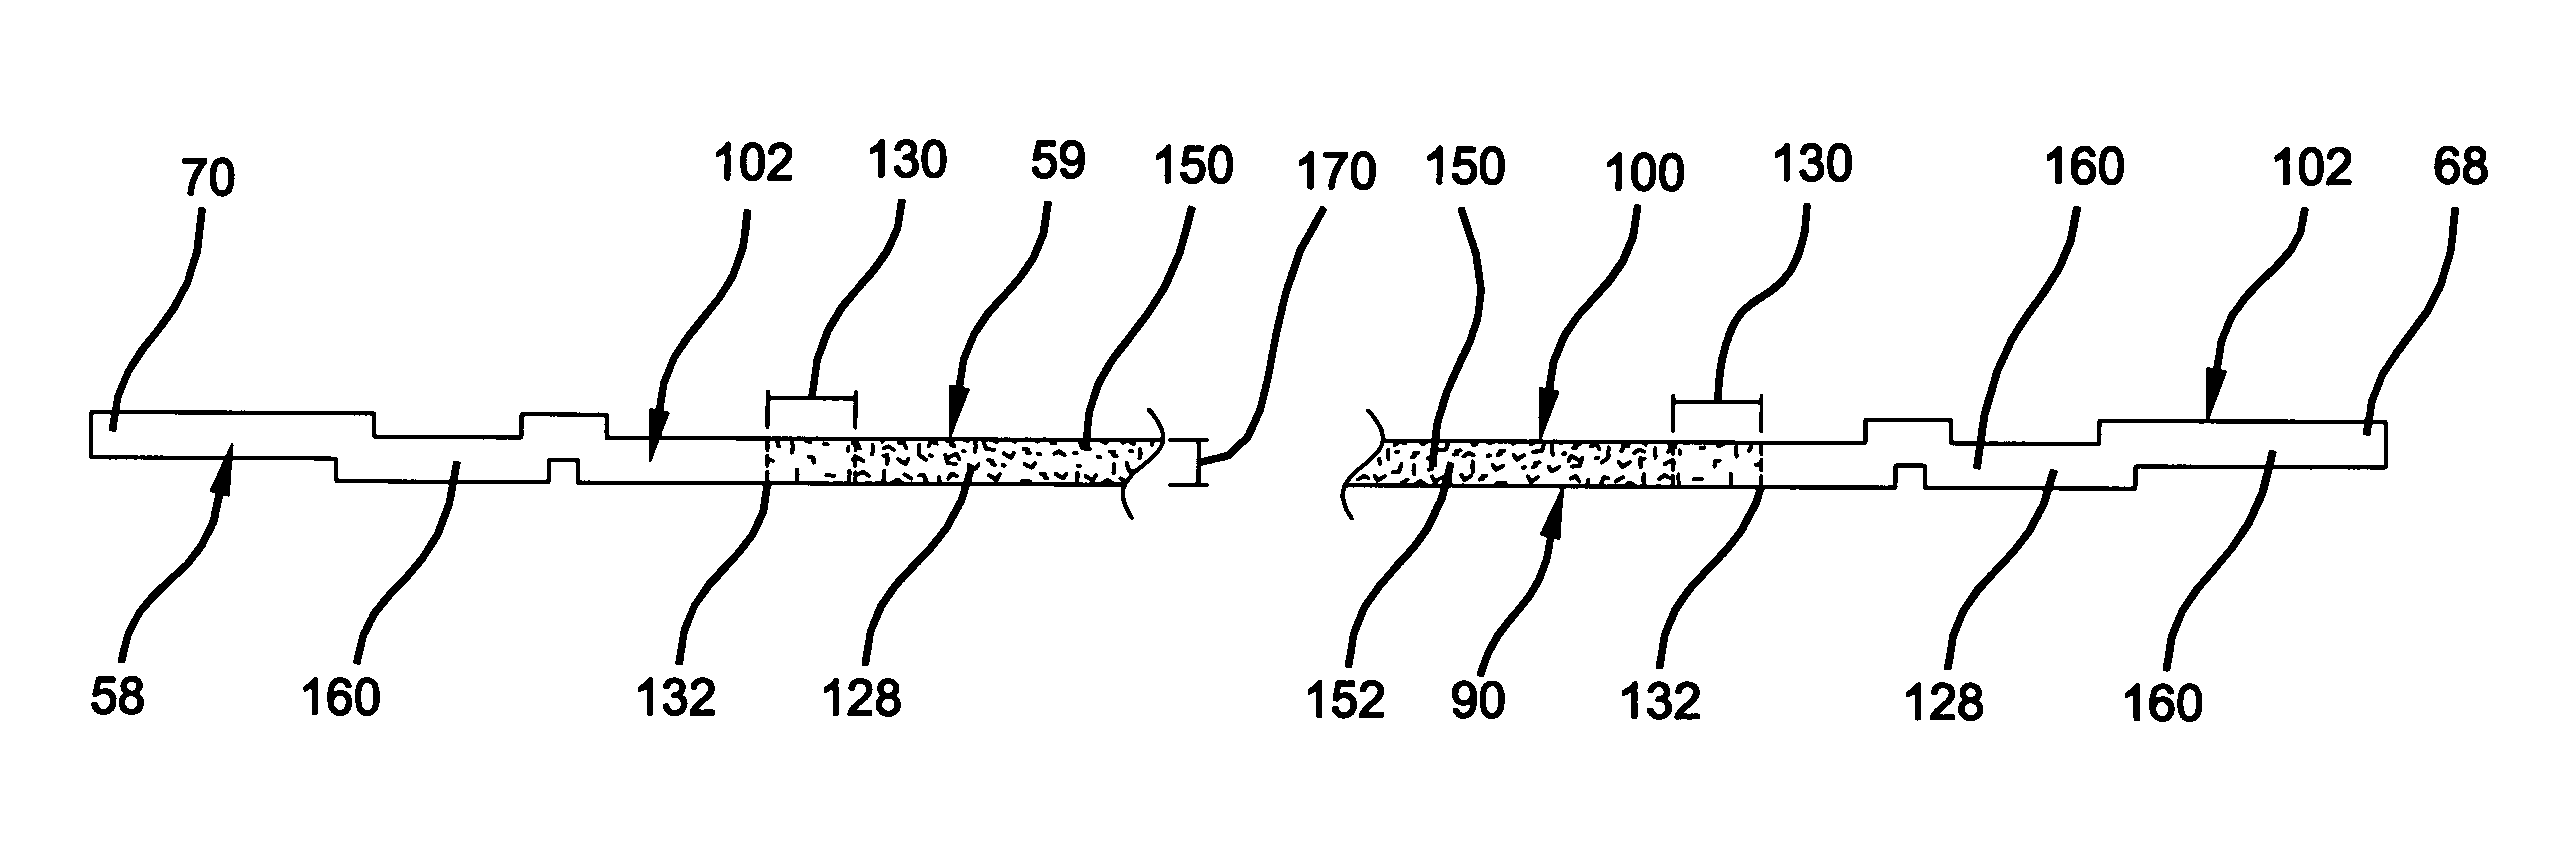 Polymeric separator plates